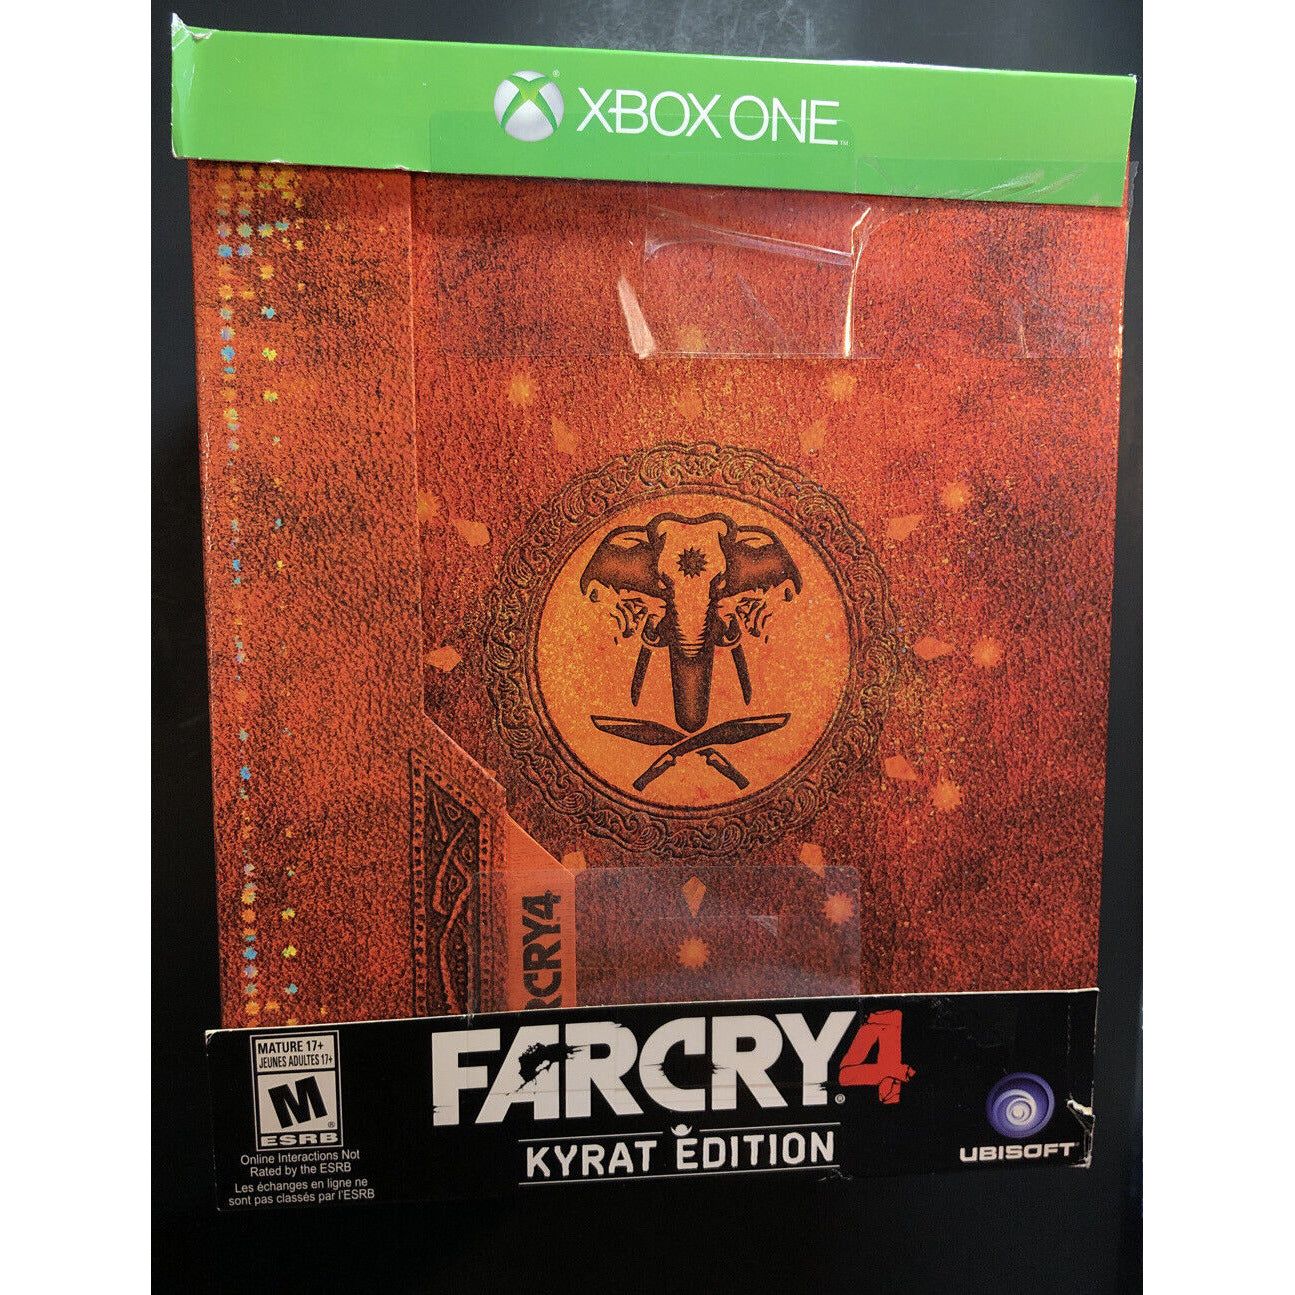 XBOX ONE - Far Cry 4 Kyrat Edition (Missing Slip Cover)